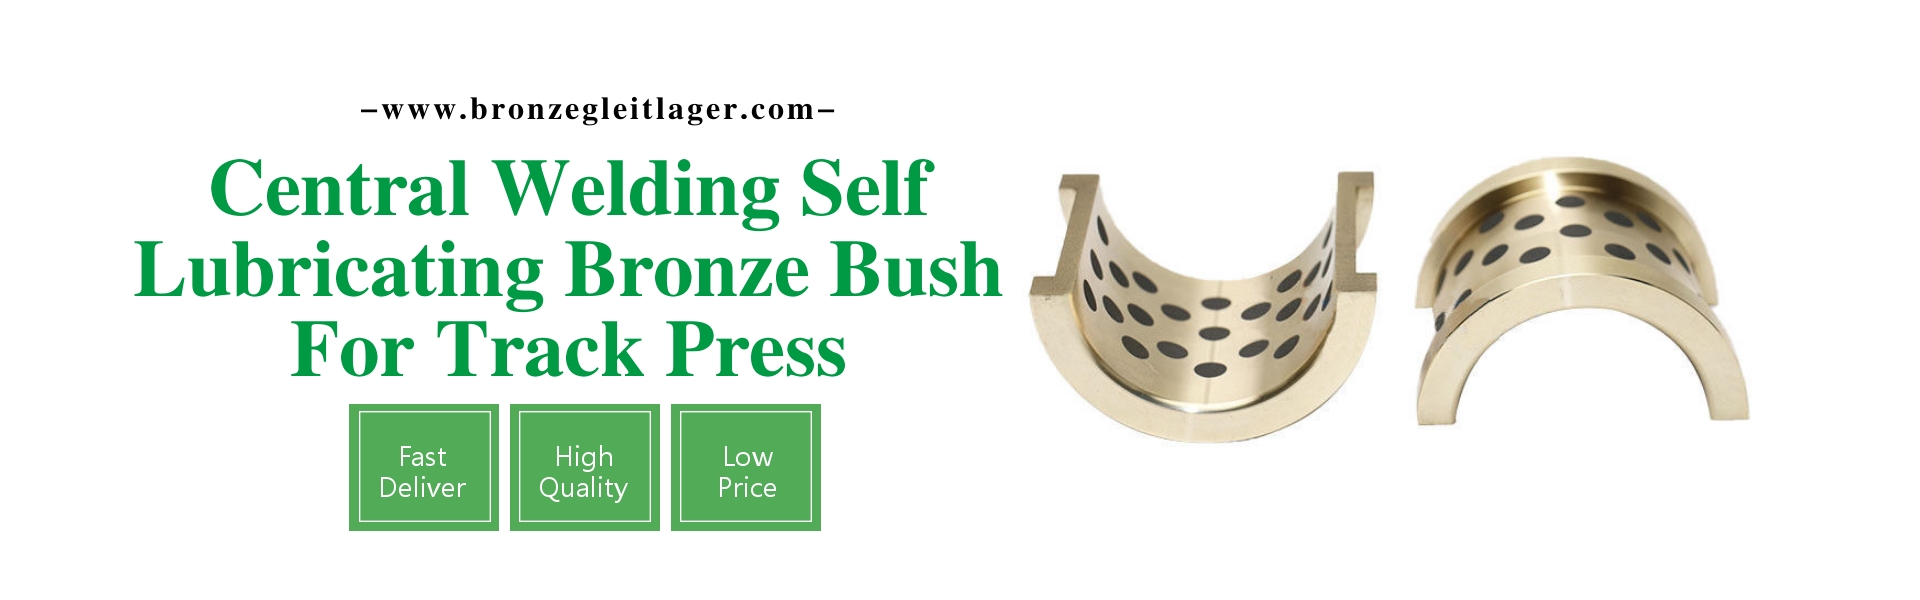 Central Welding Self Lubricating Bronze Bush For Track Press